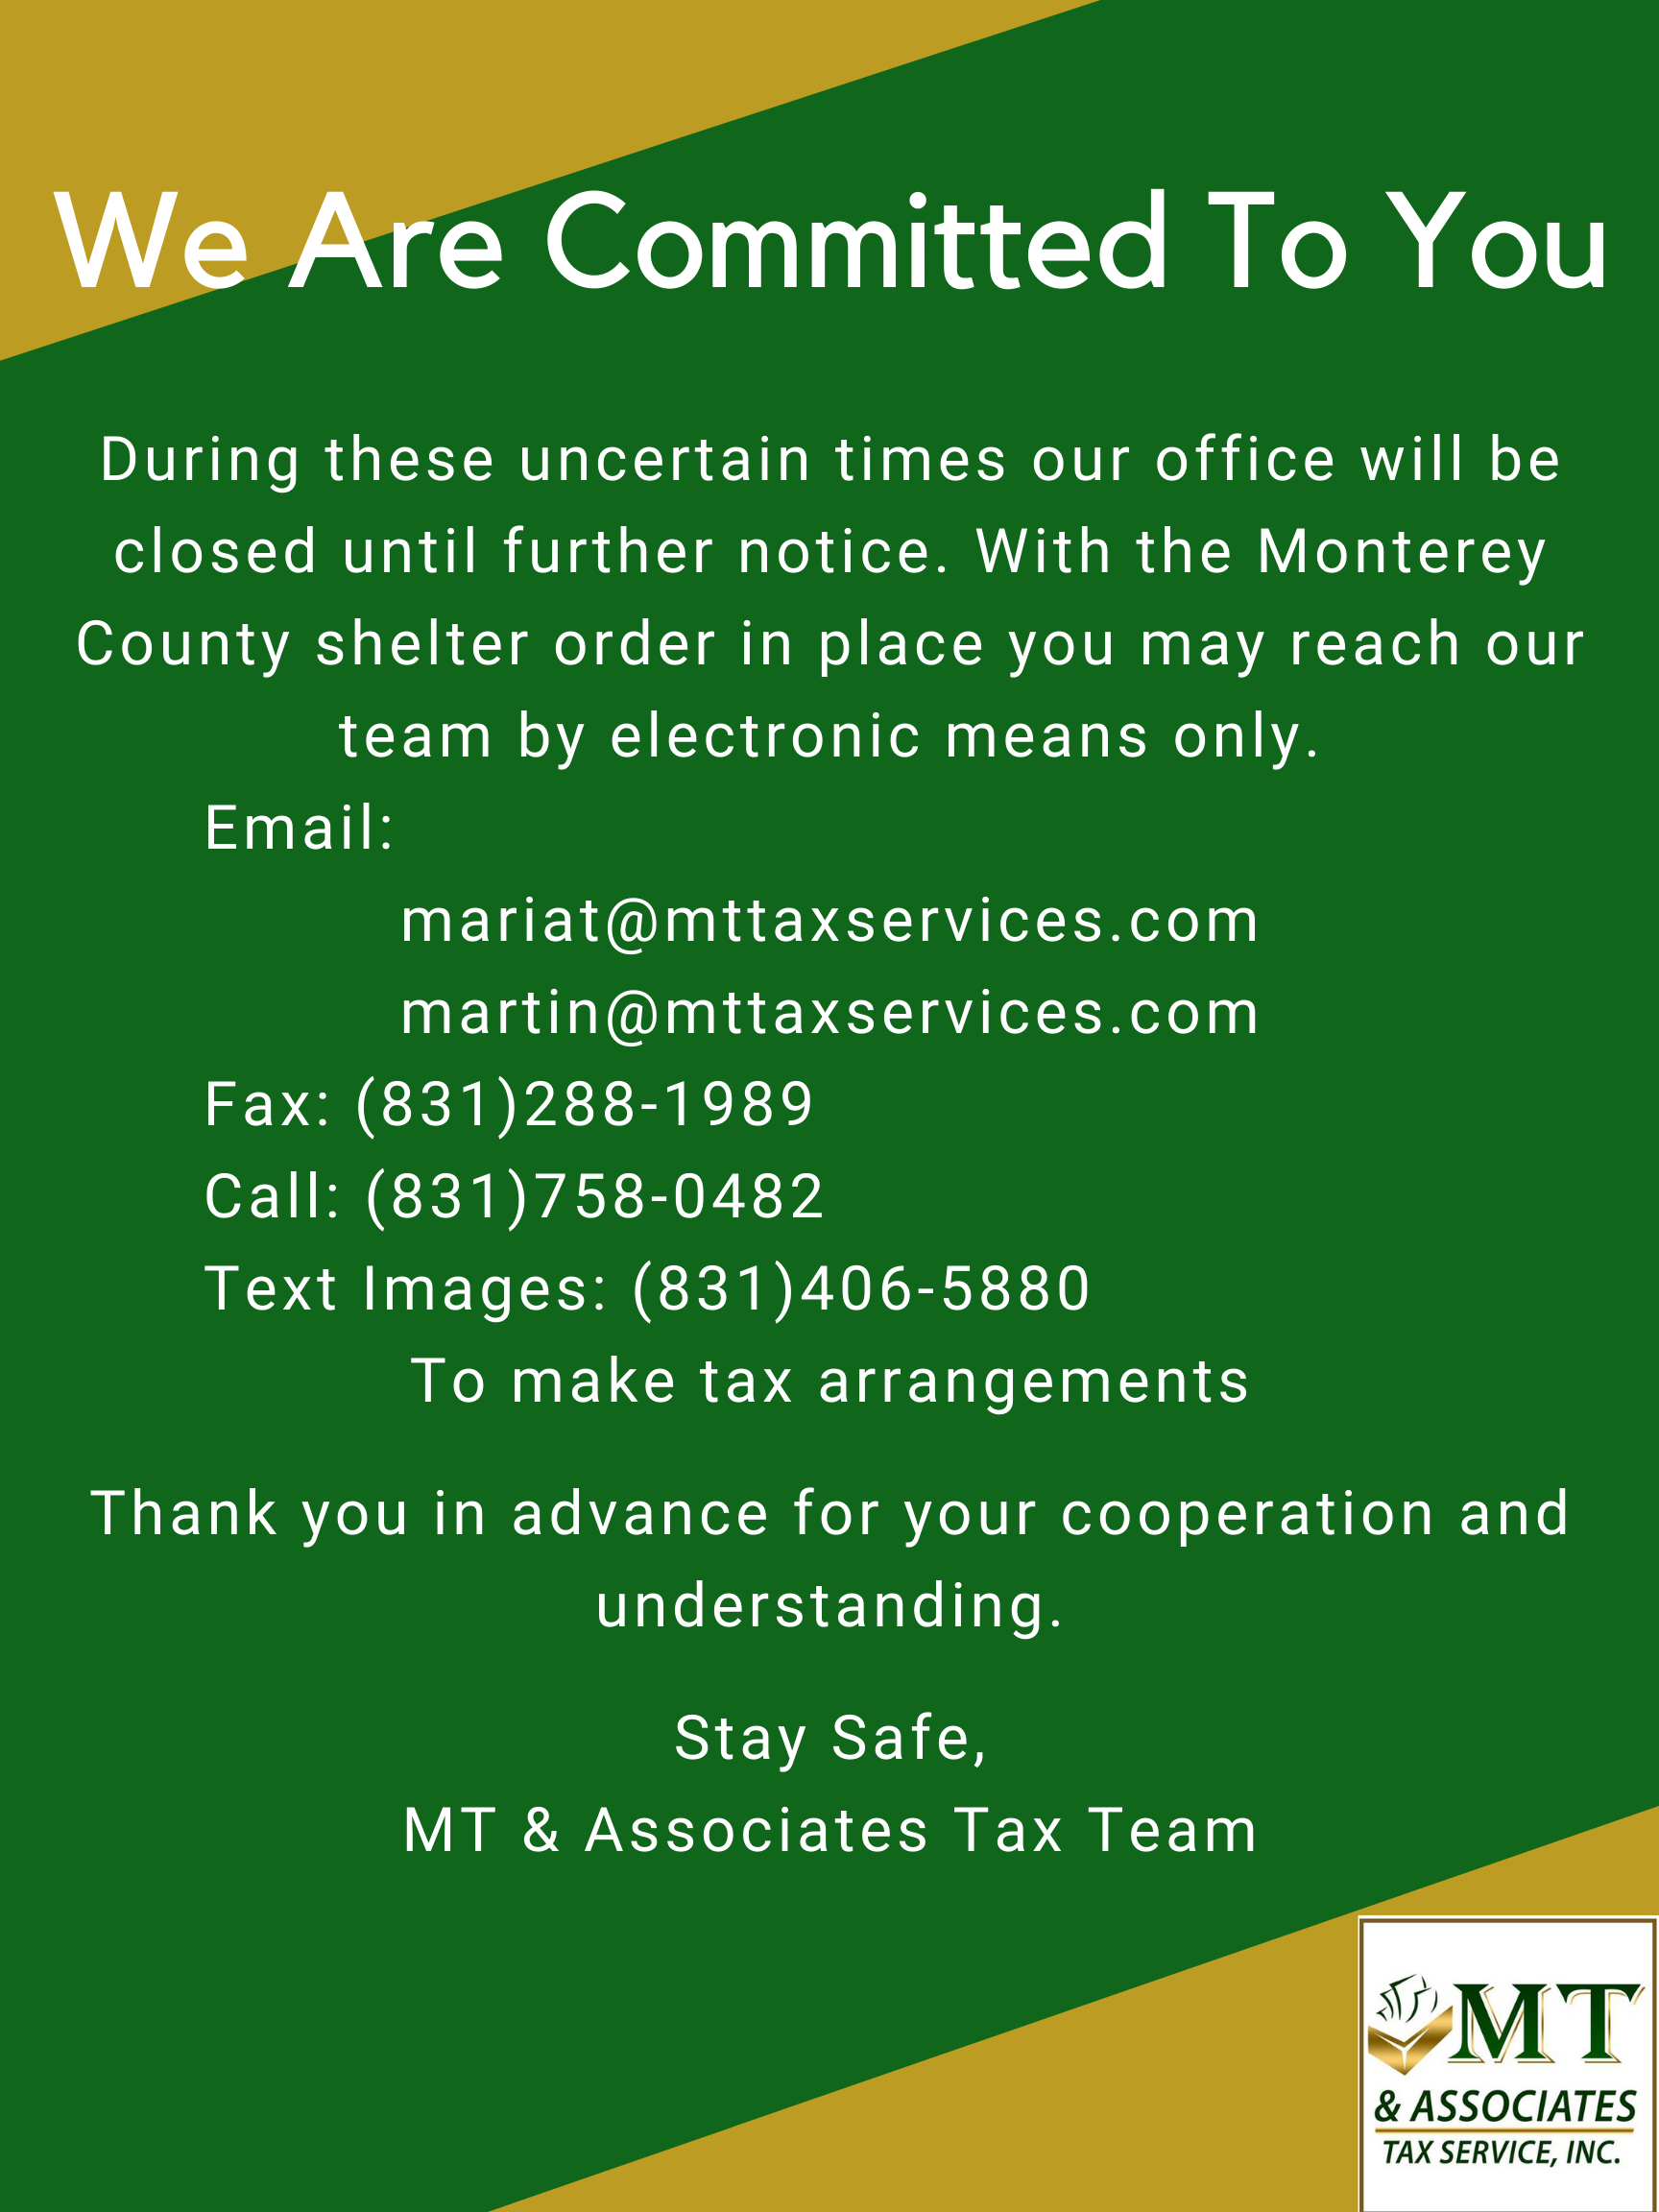 MT & Associates Tax Service, Inc. Photo